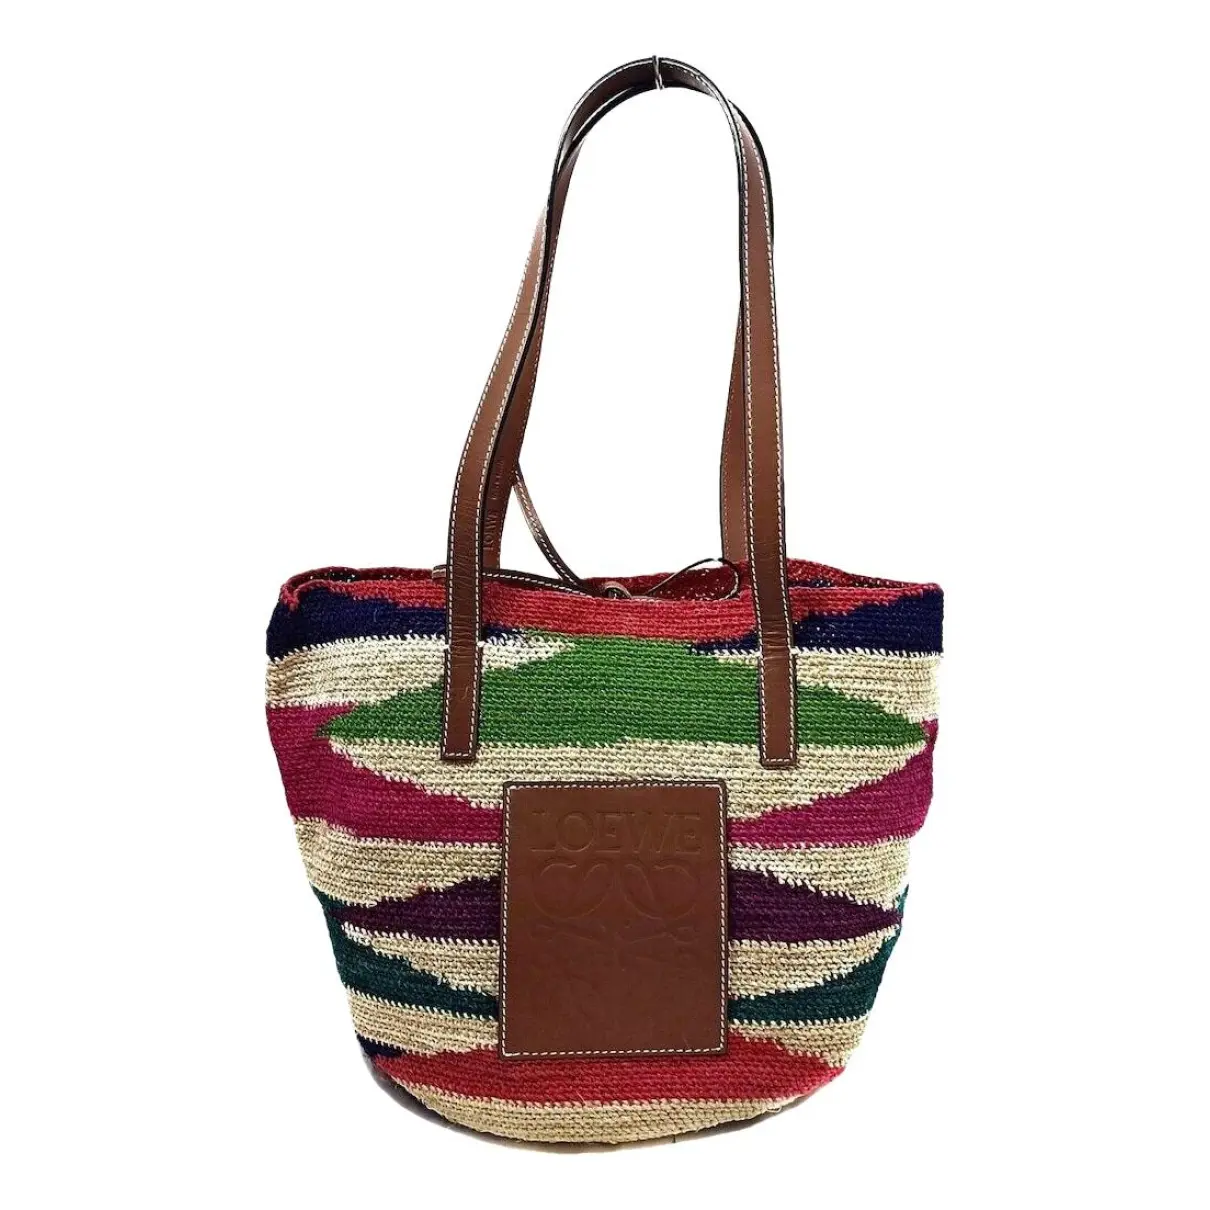 Basket Bag leather handbag